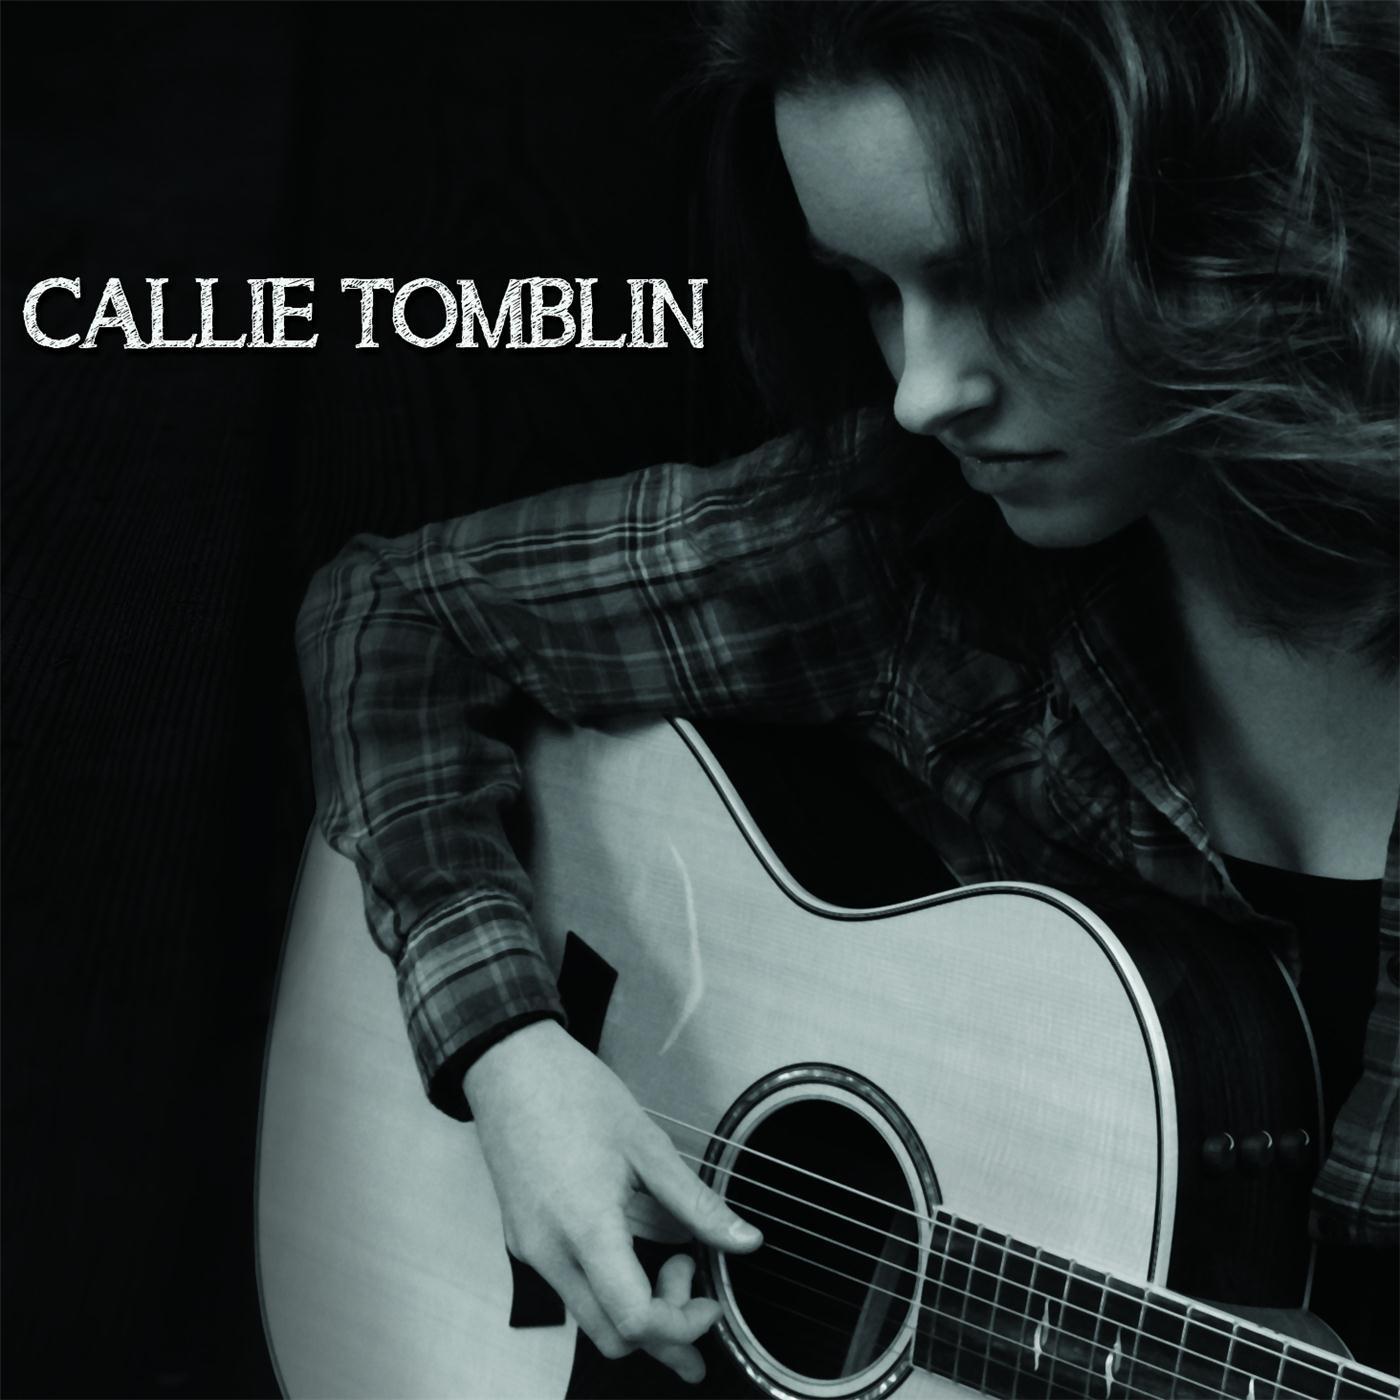 Callie Tomblin